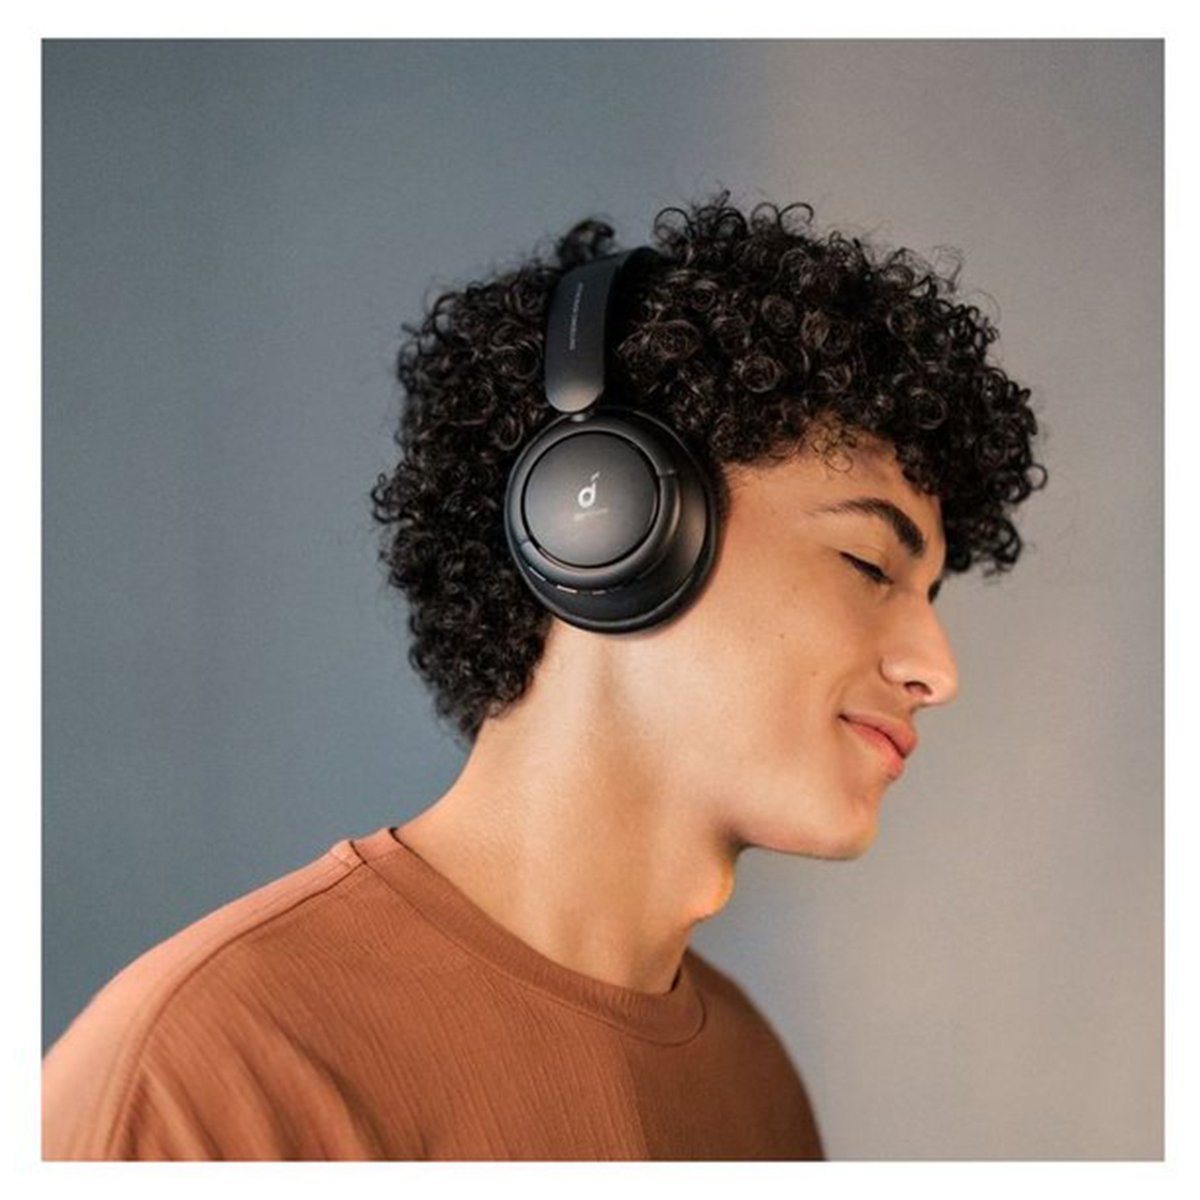 Anker (A3029HA1) Soundcore Life Tune Wireless On Ear Headset Grey